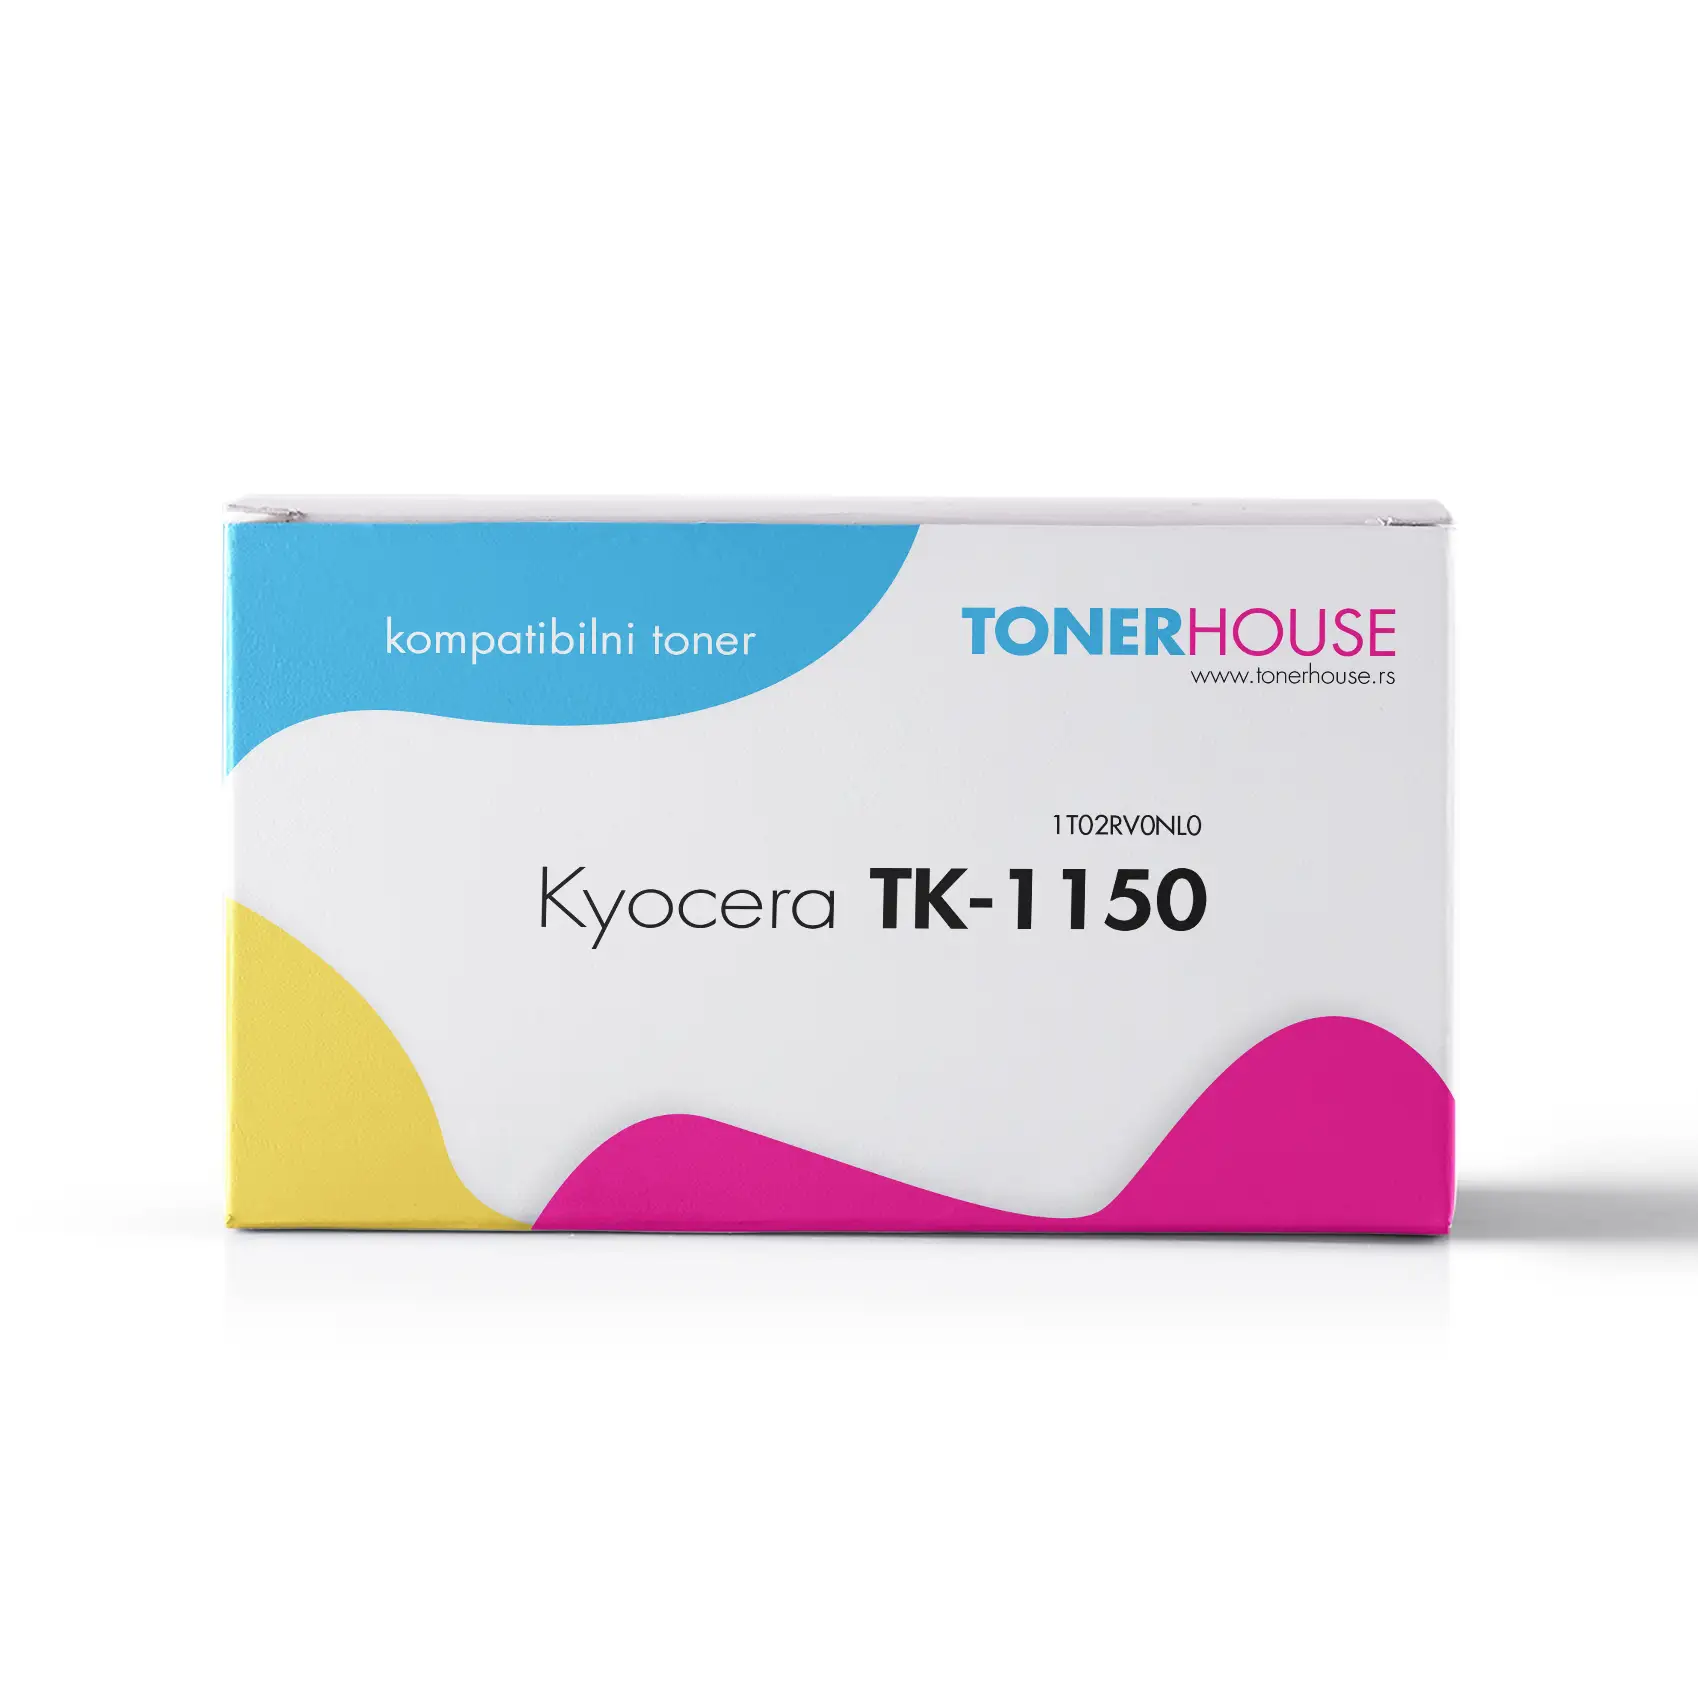 Kyocera TK-1150 Toner Kompatibilni